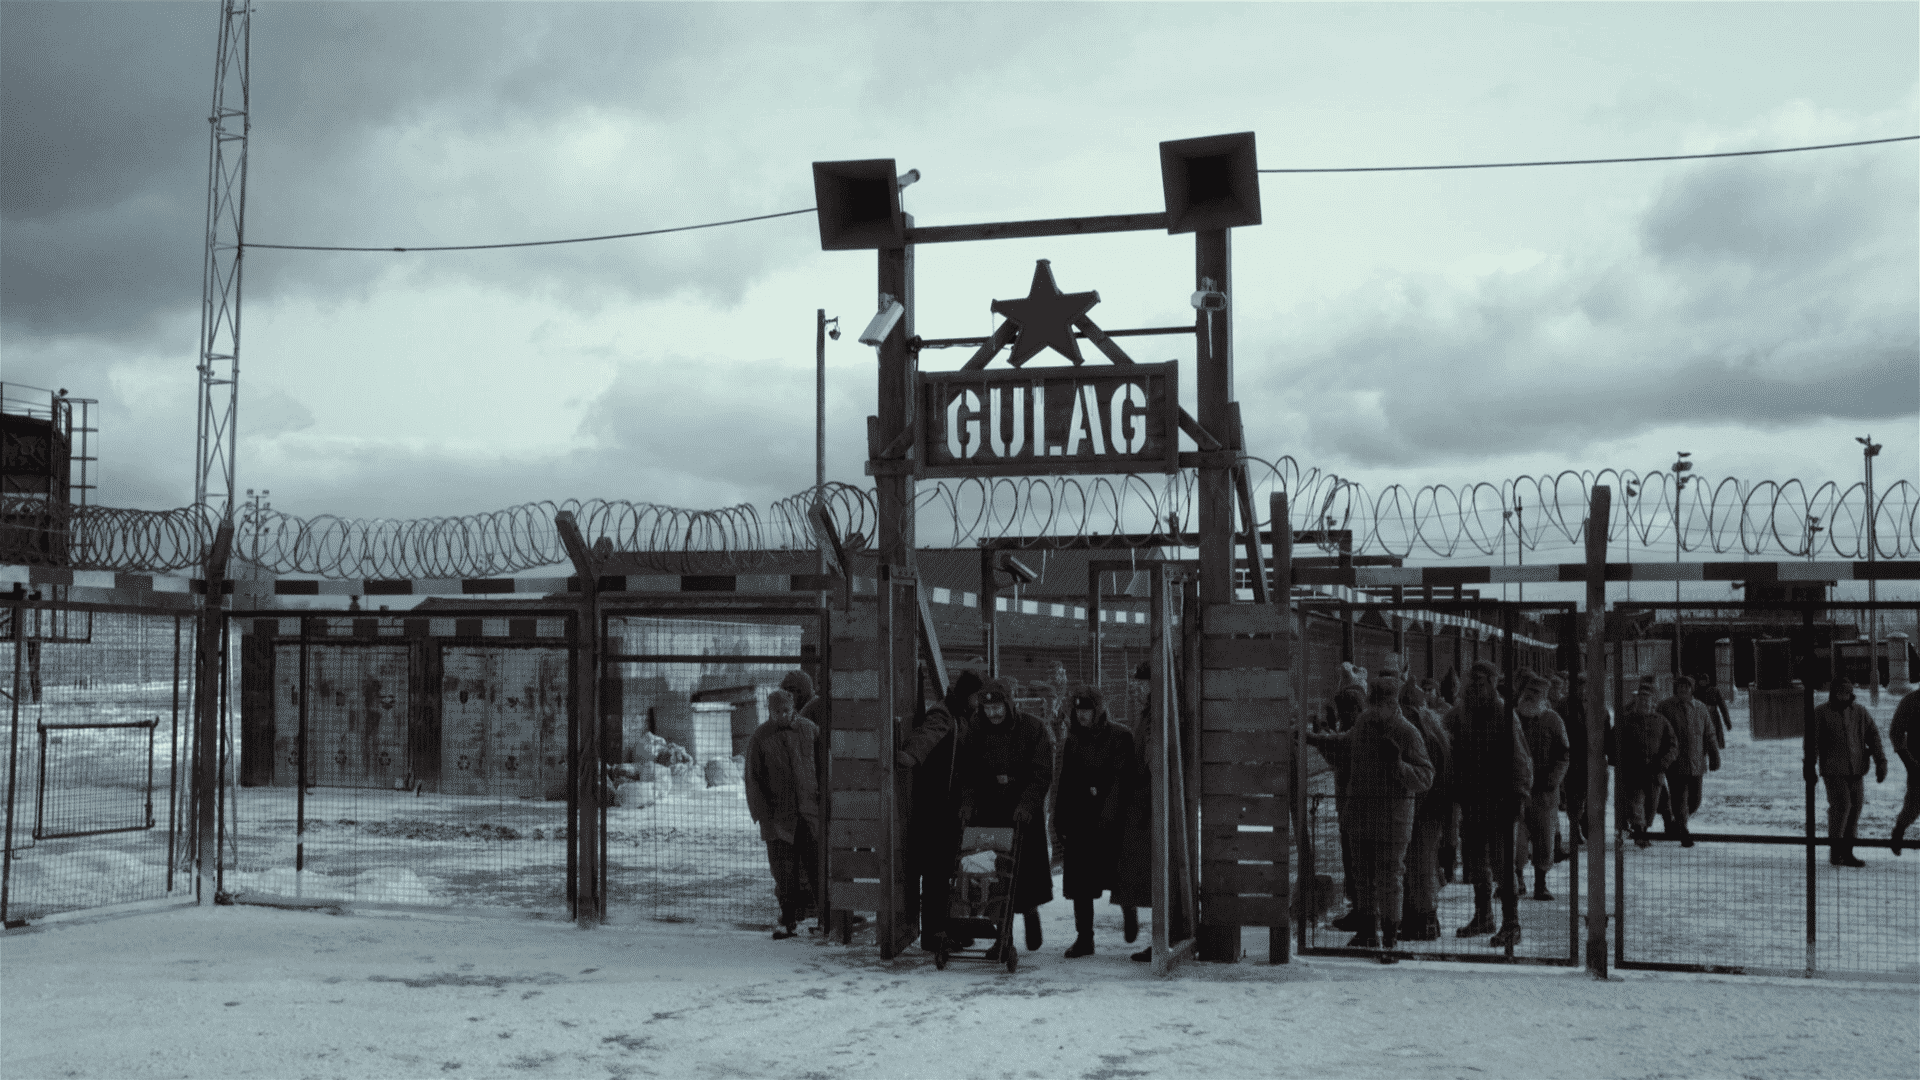 Gulag: quando surgiu, conceito e características